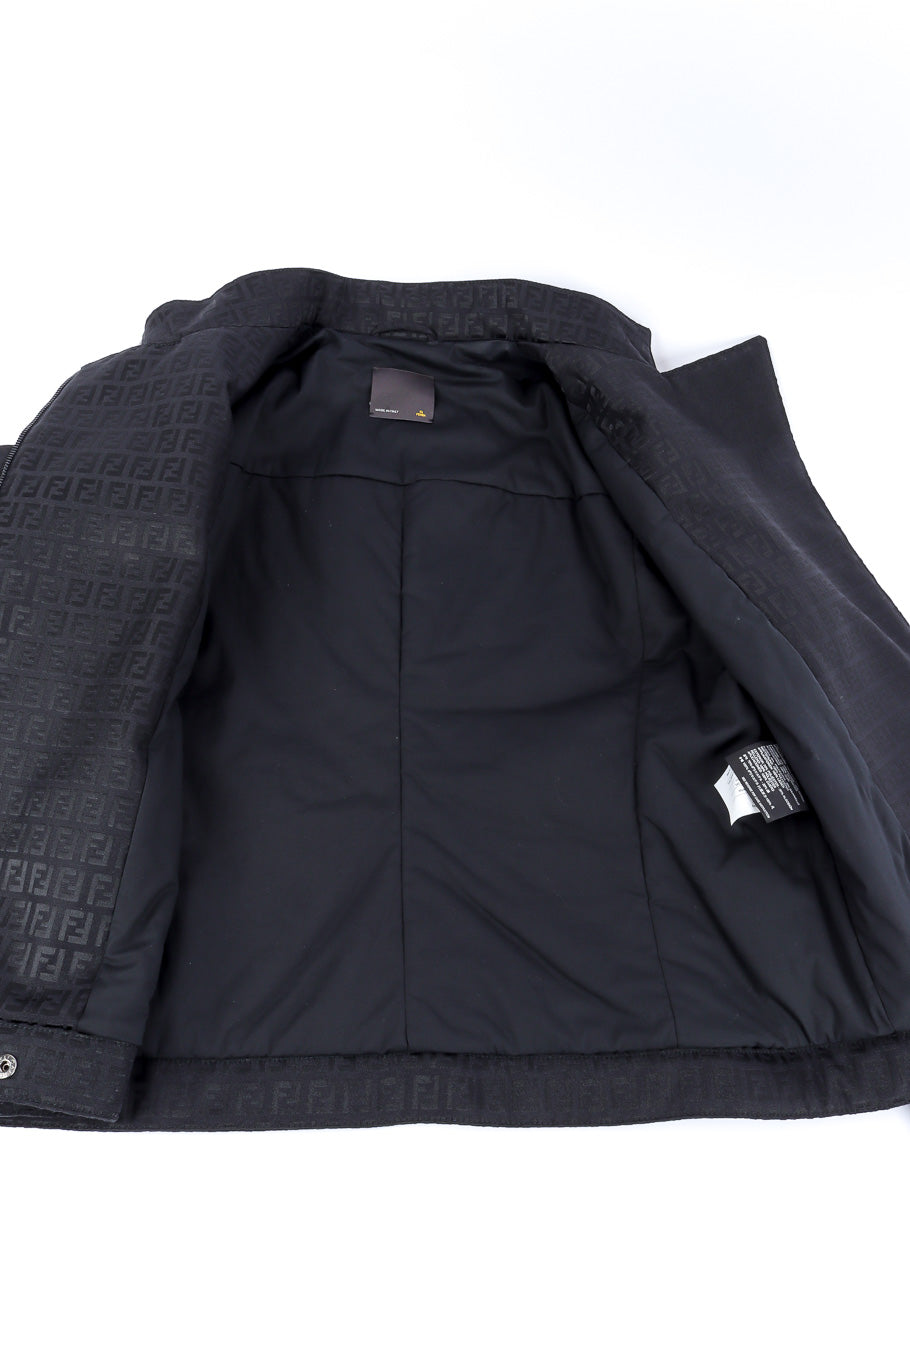 Fendi zucca monogram jacket lining detail @recessla